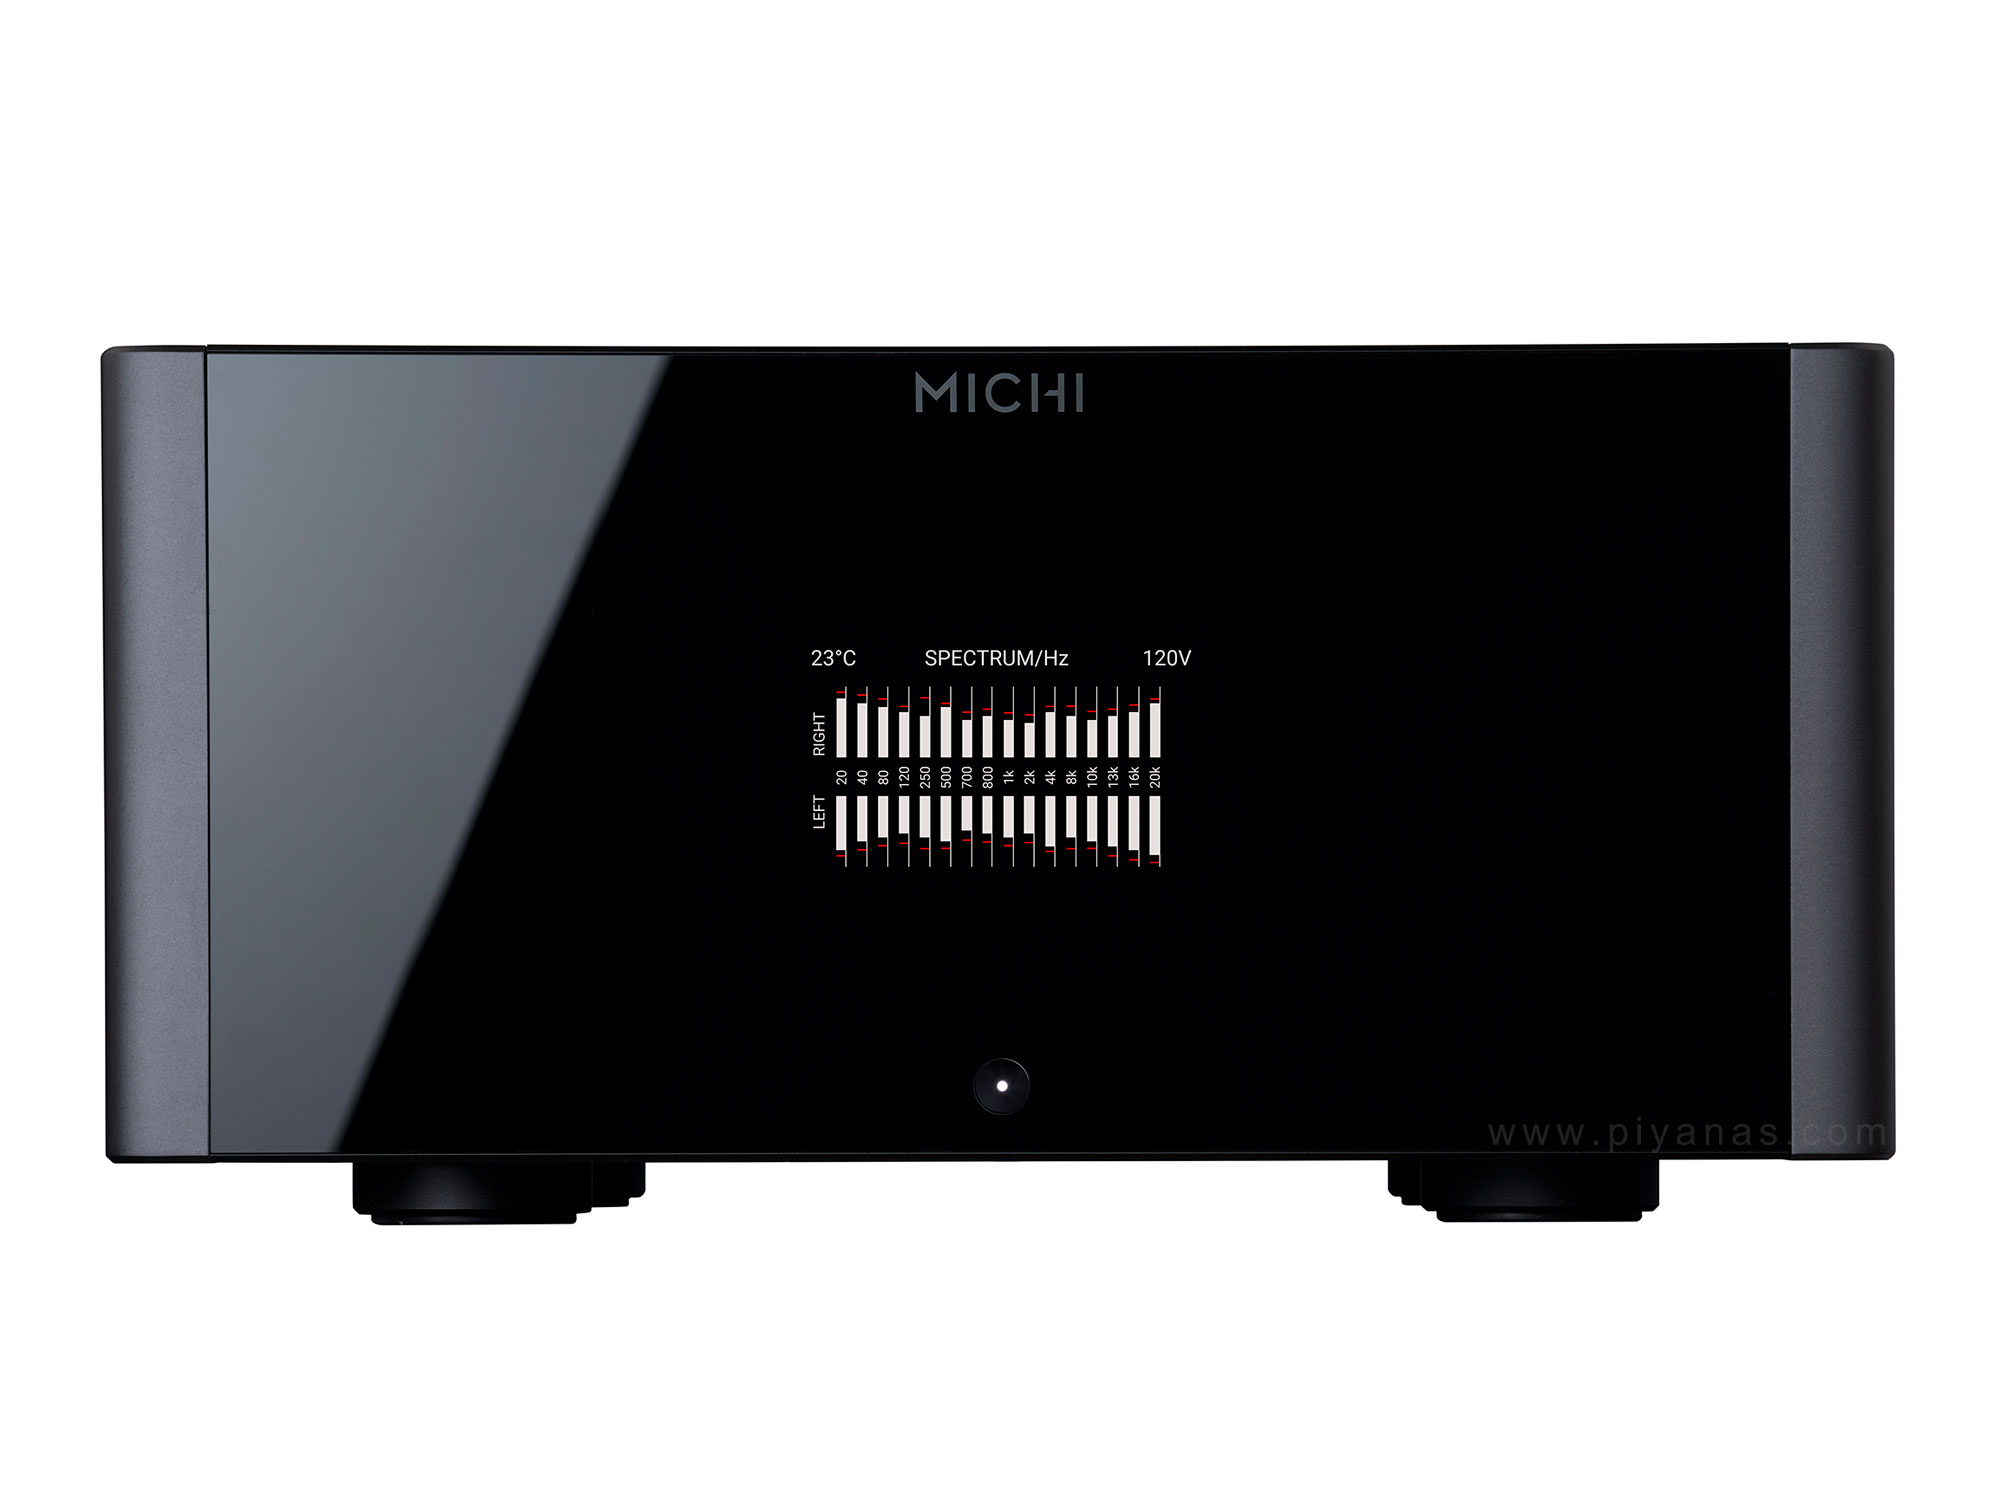 MICHI S5 (Stereo Power Amp)